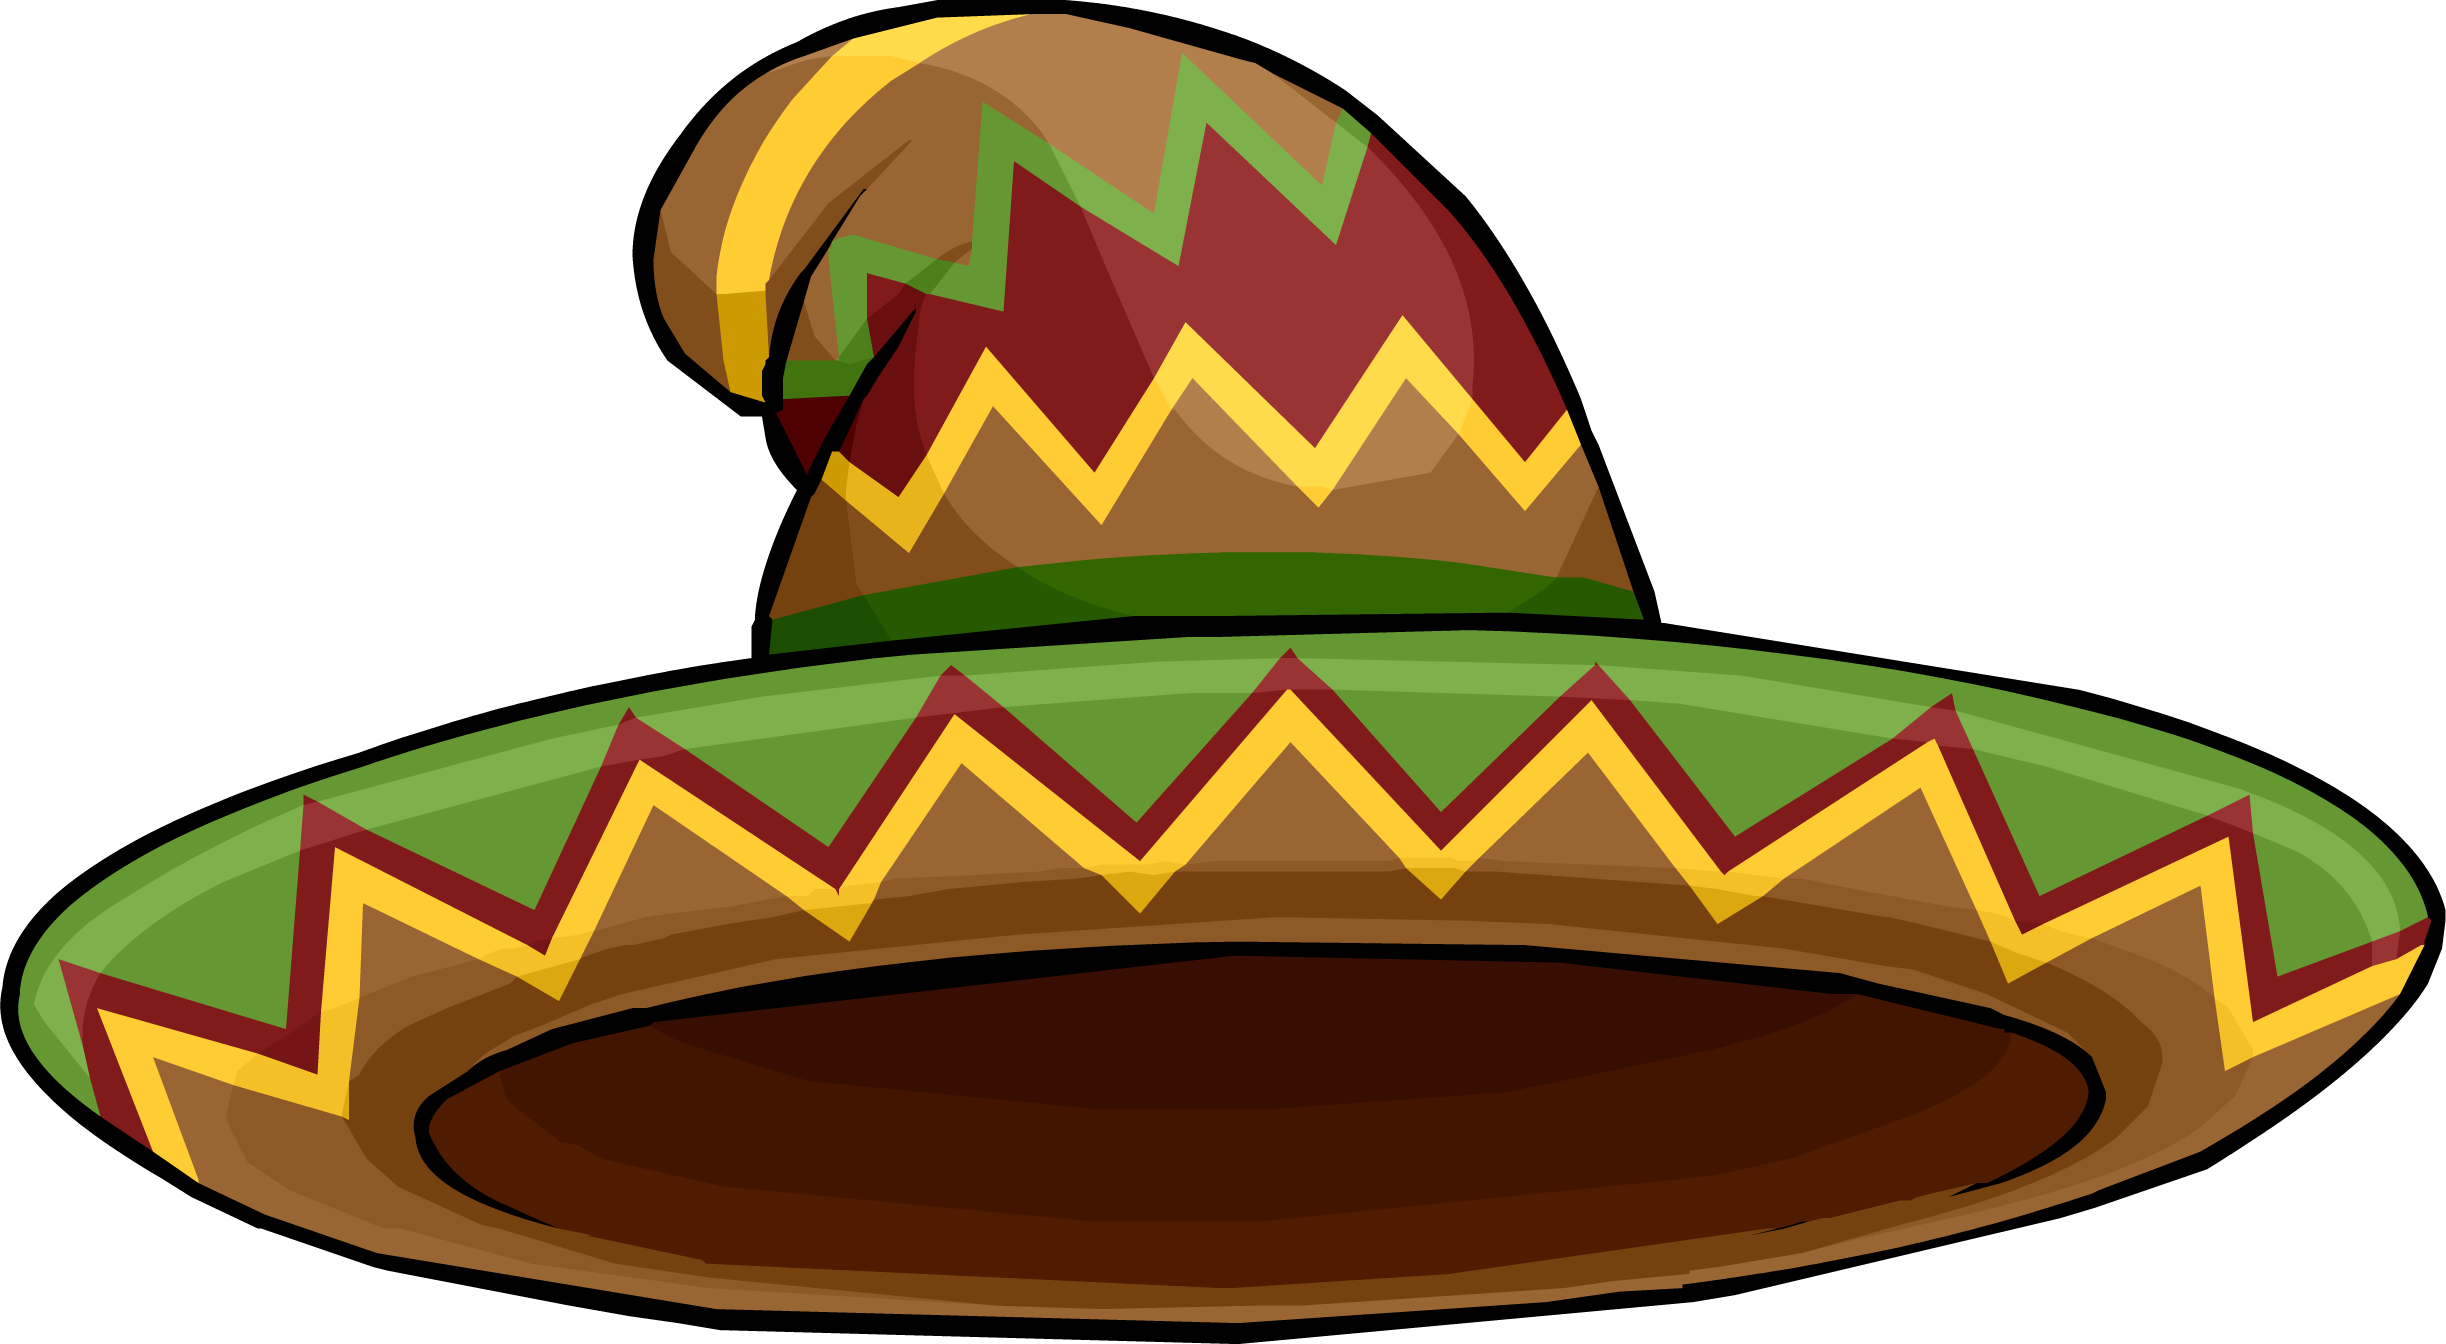 Sombrero Hat PNG Image